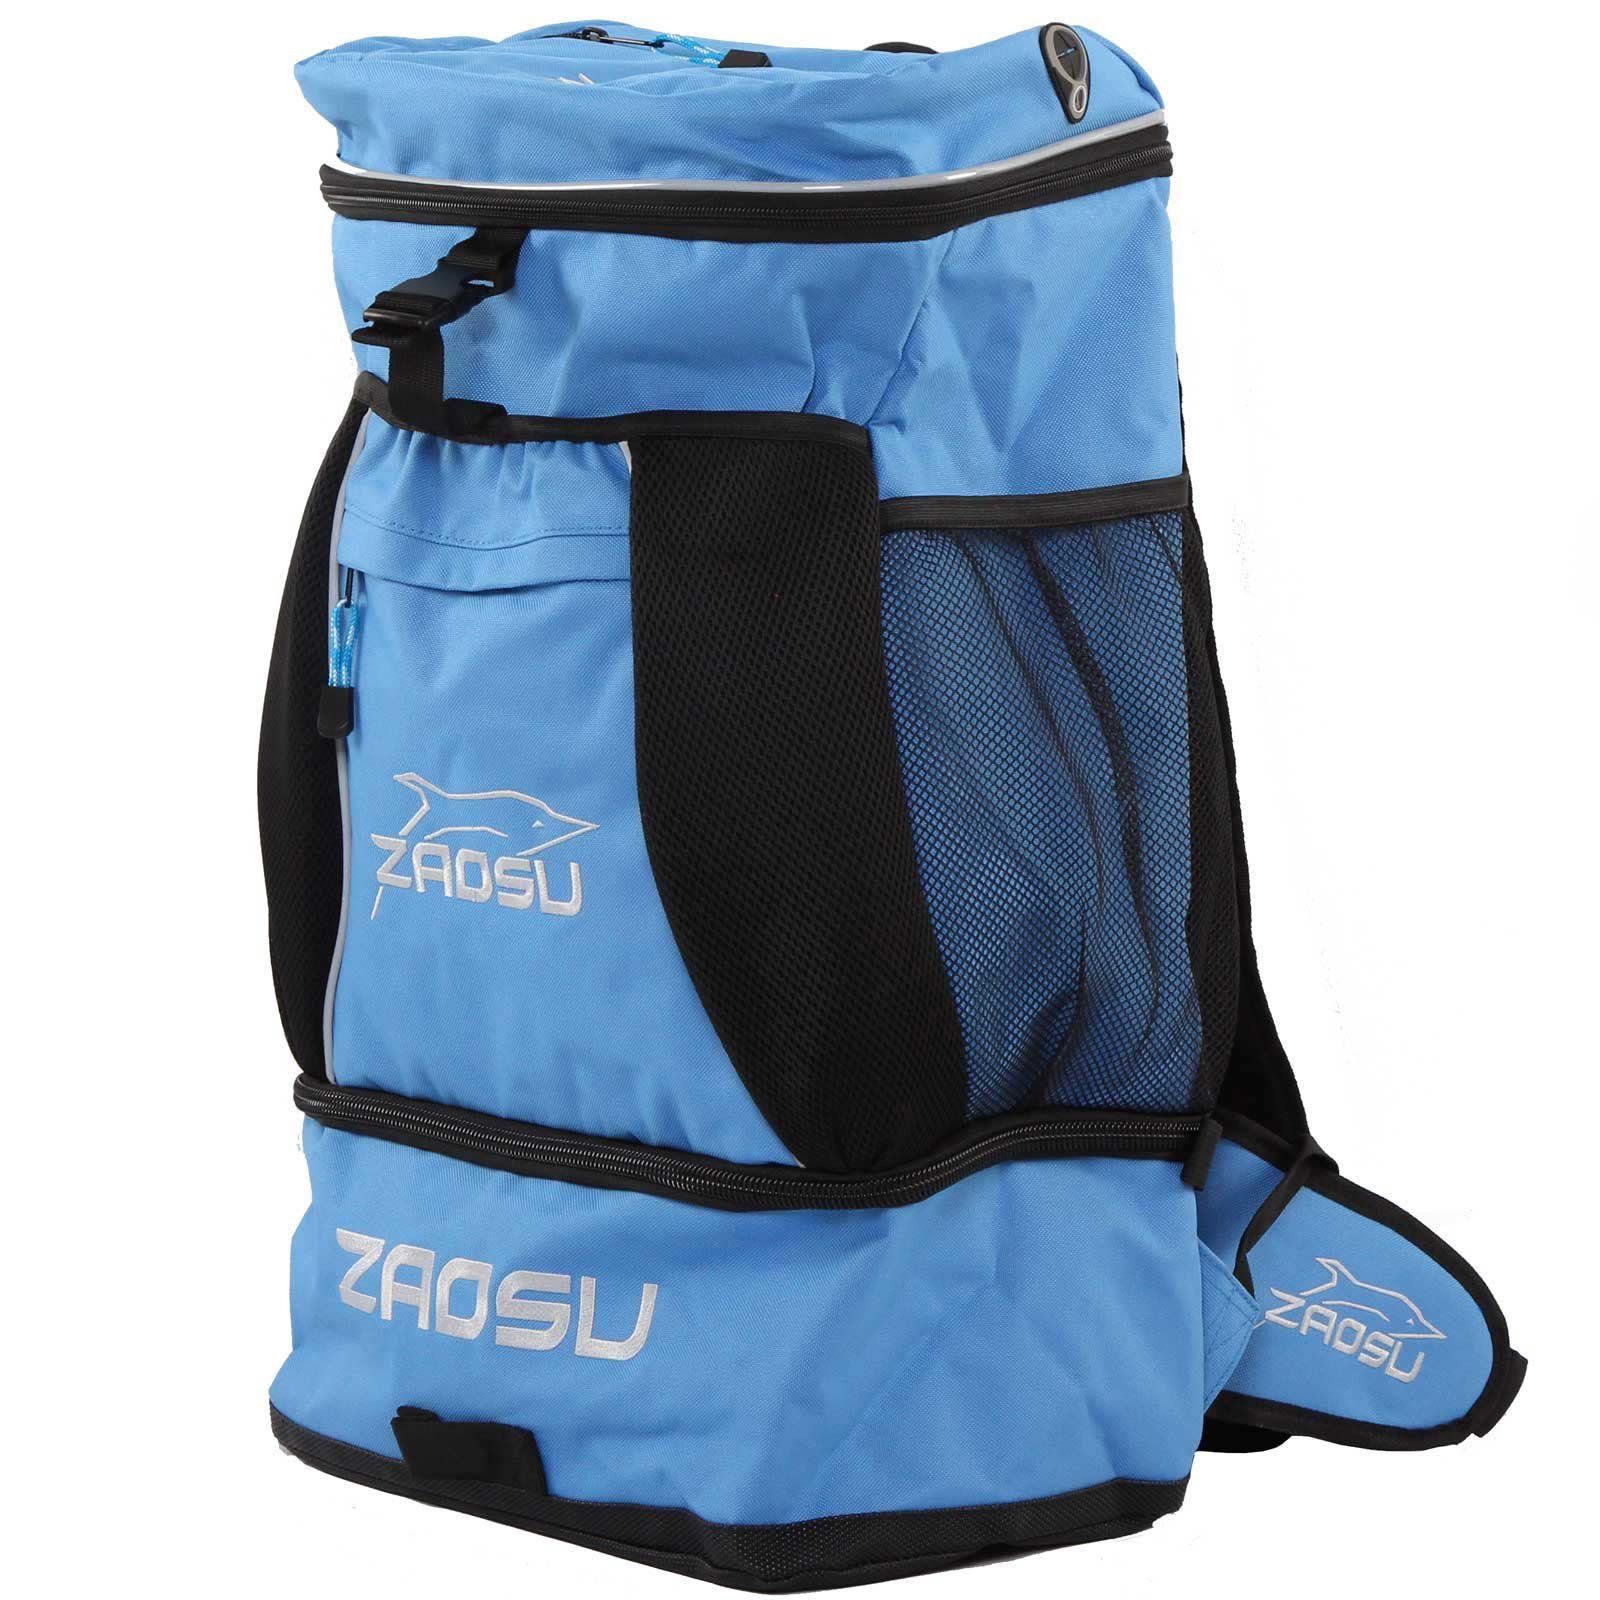 Bag ZAOSU Transition Sportrucksack neonblau